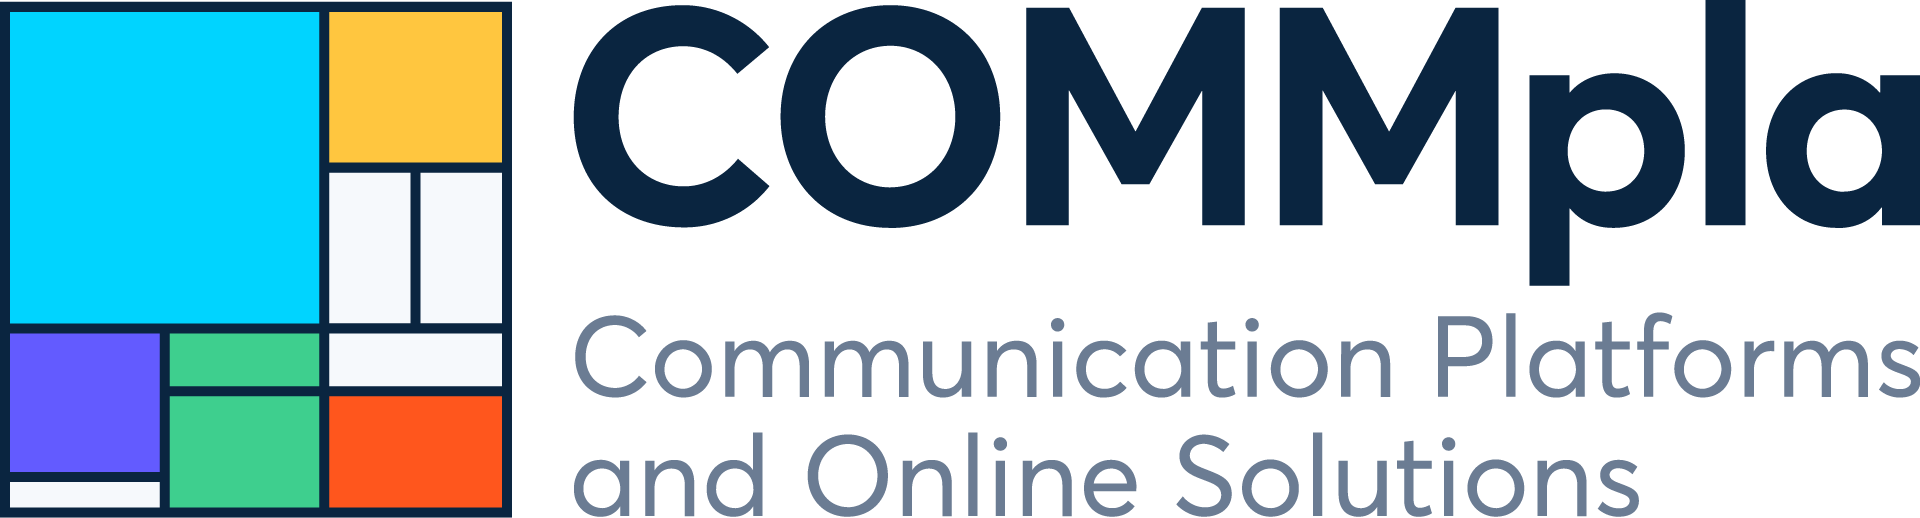 COMMpla Logo